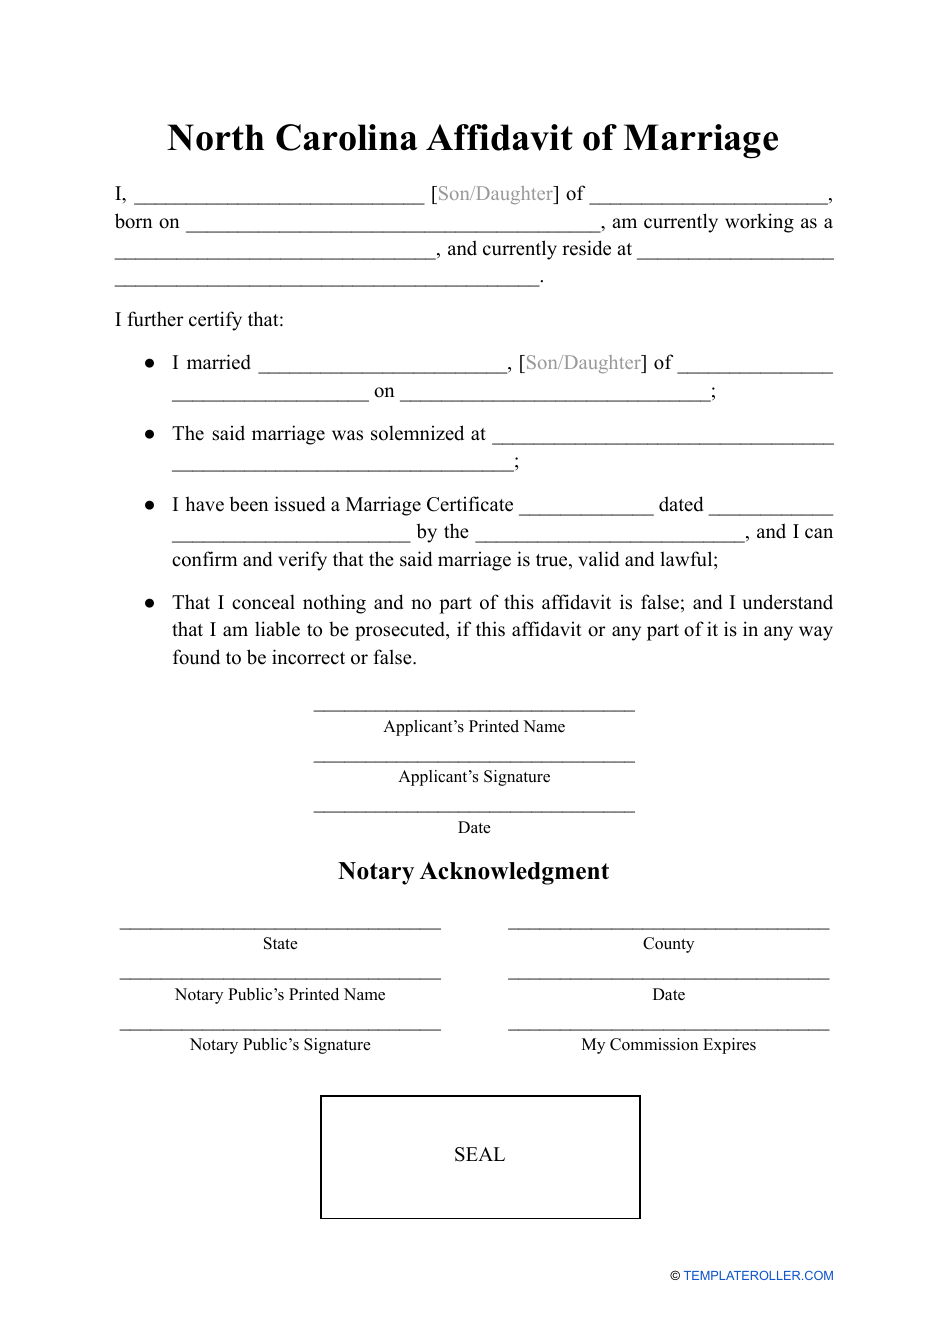 Affidavit of Marriage - North Carolina, Page 1